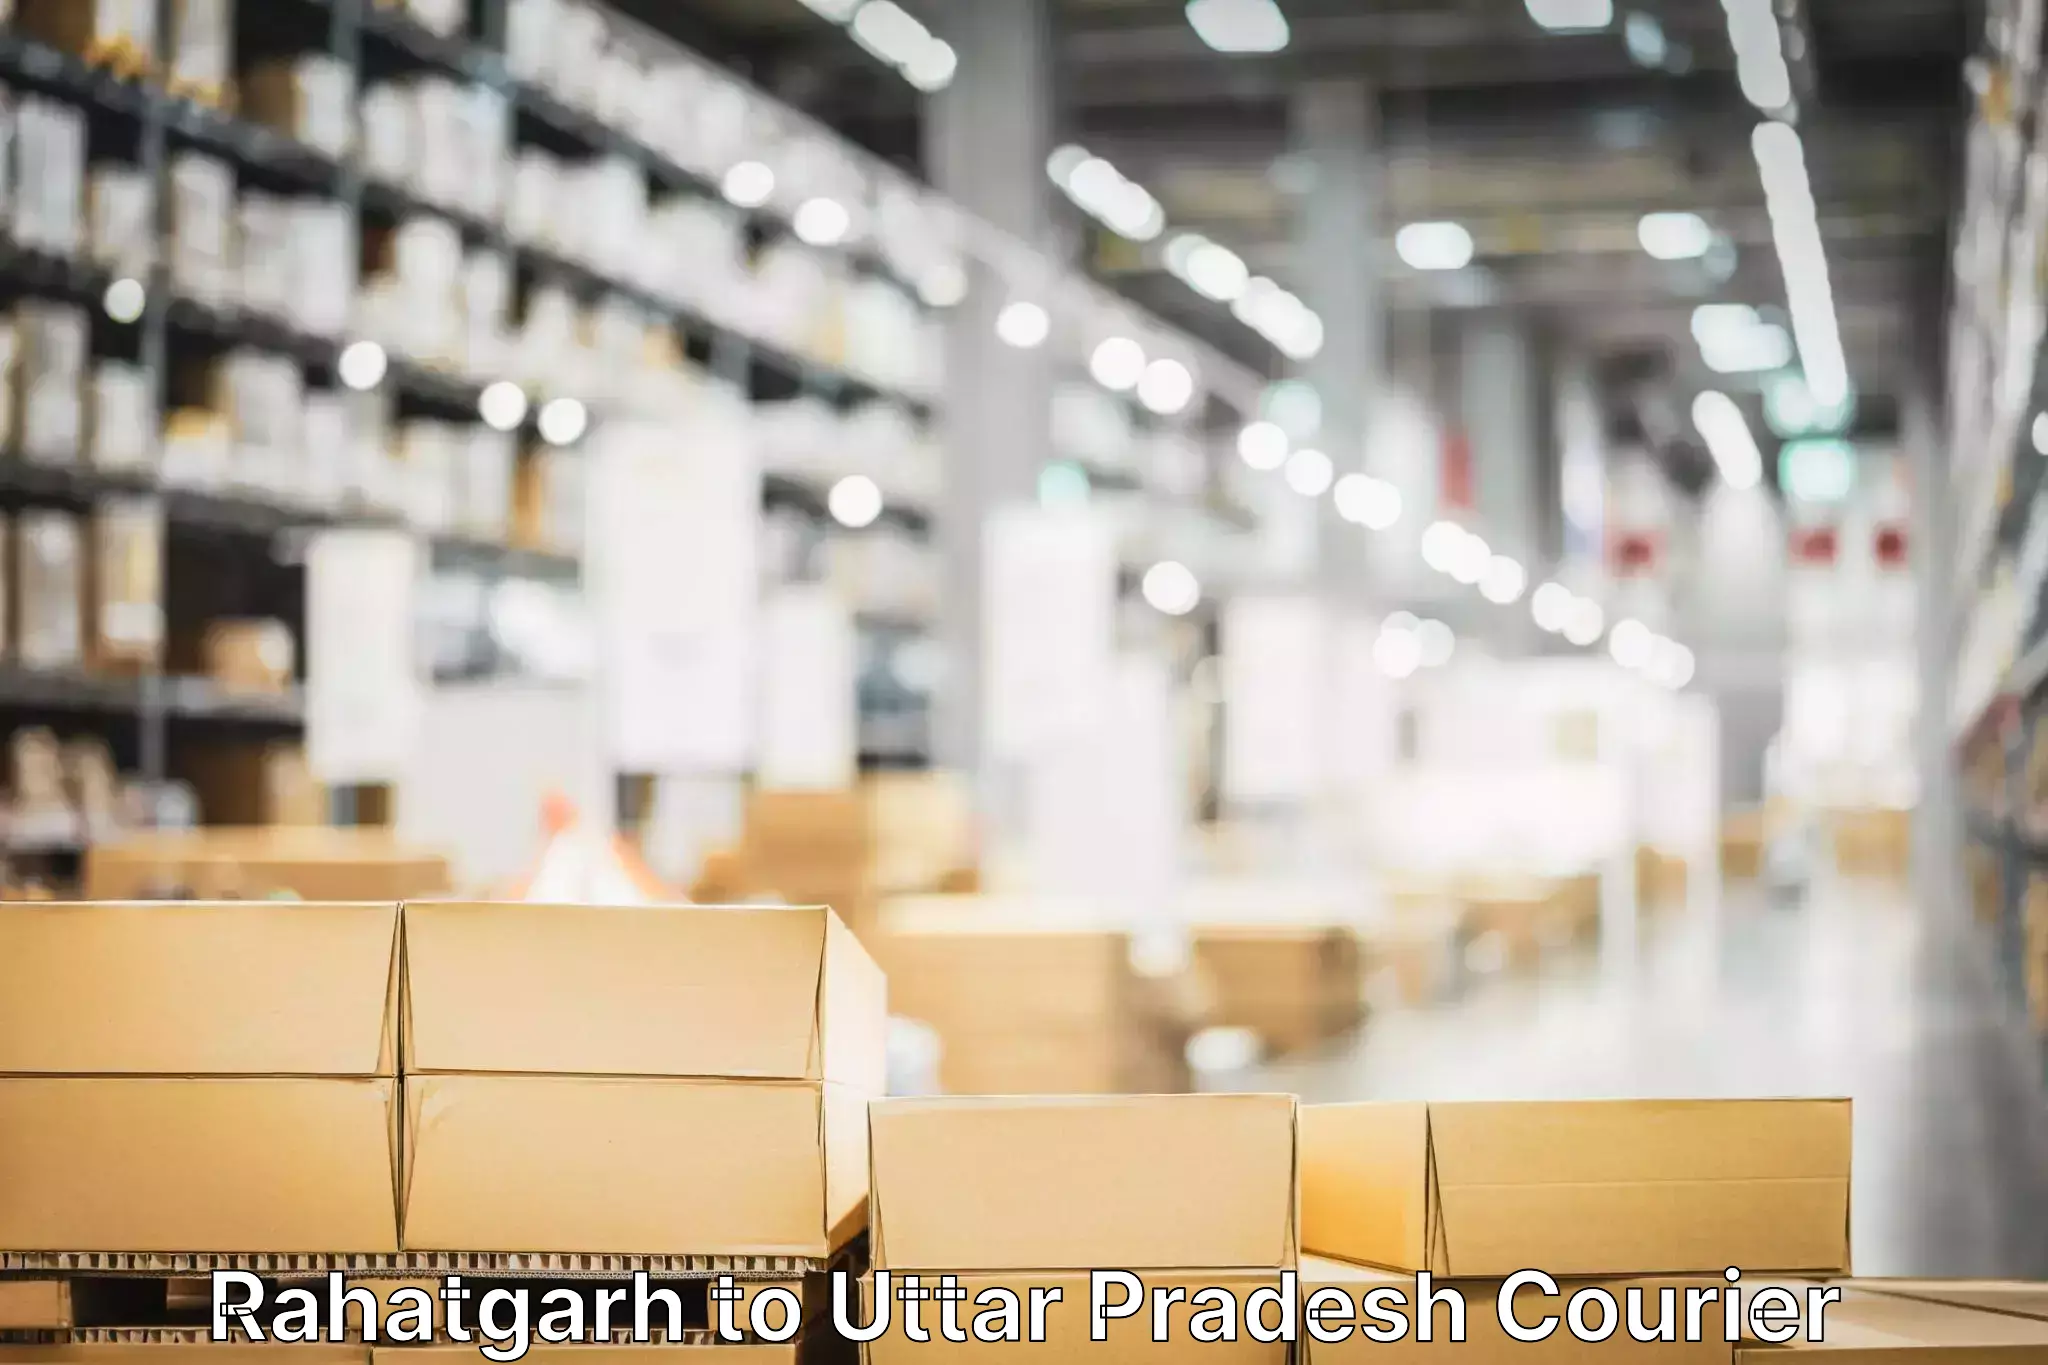 Customized delivery options Rahatgarh to Uttar Pradesh